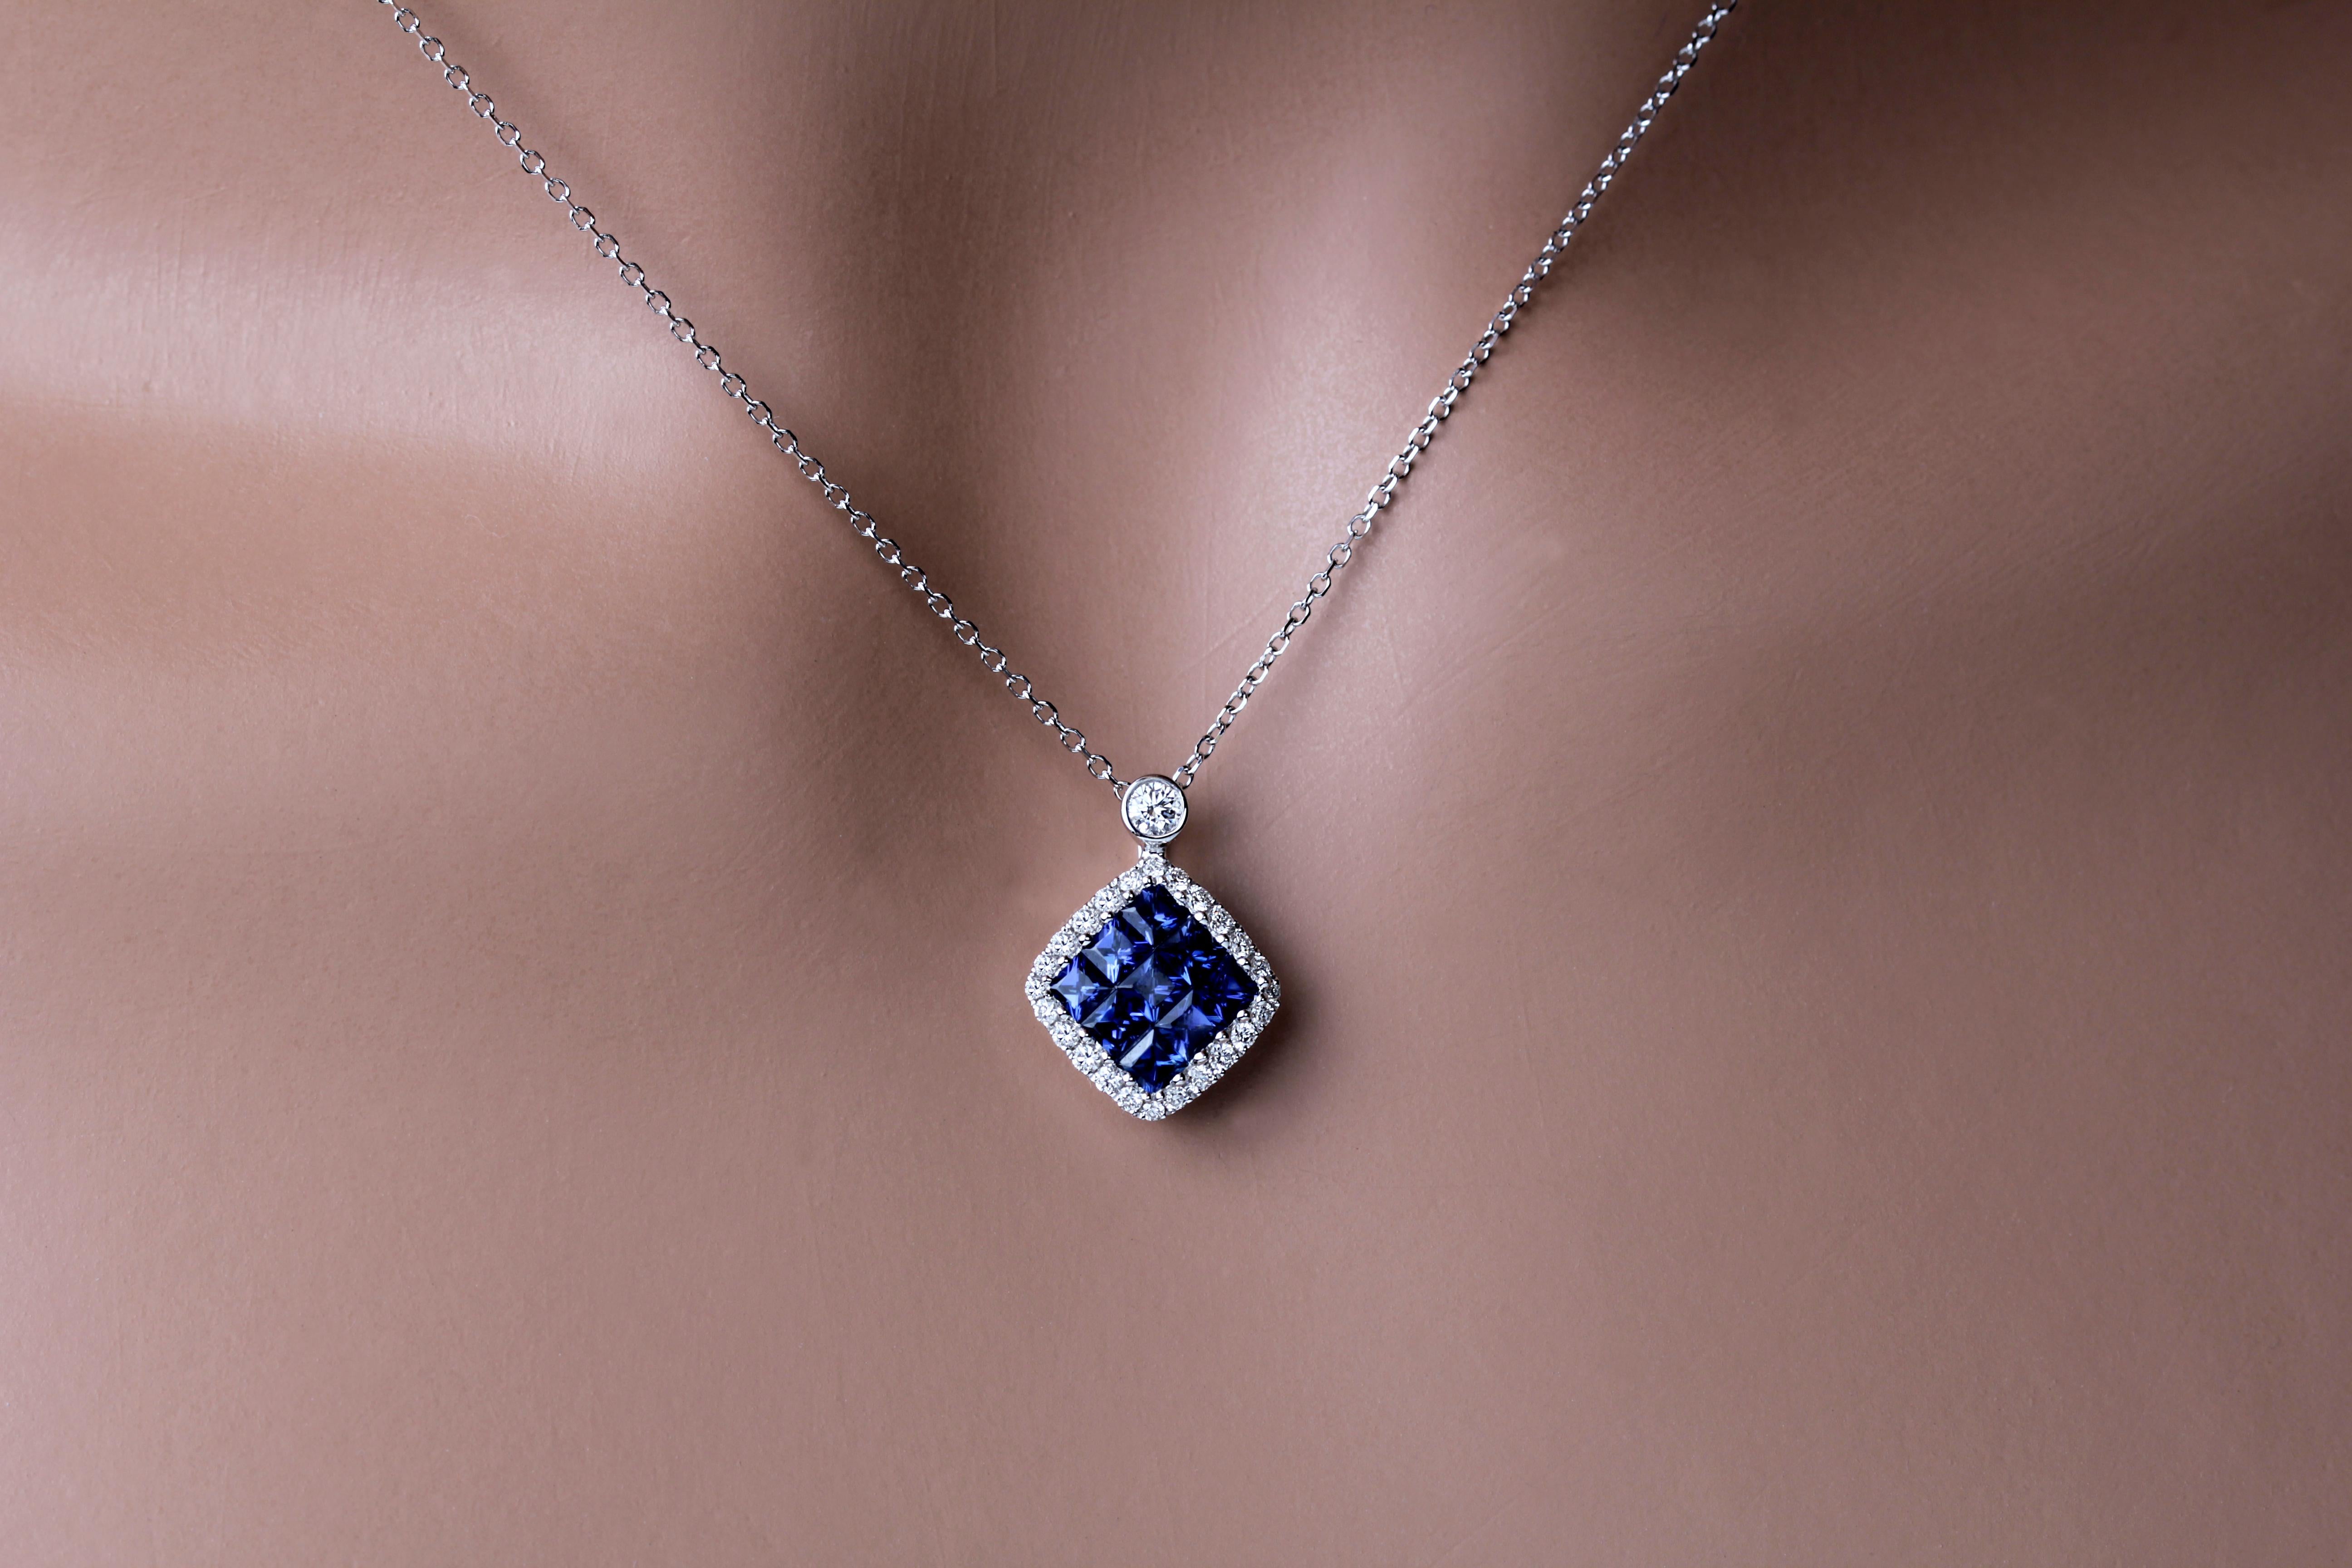 Square Cut 0.74 Carat Blue Sapphire and 0.21 Carat Diamond Pendant in 18k White ref1461 For Sale